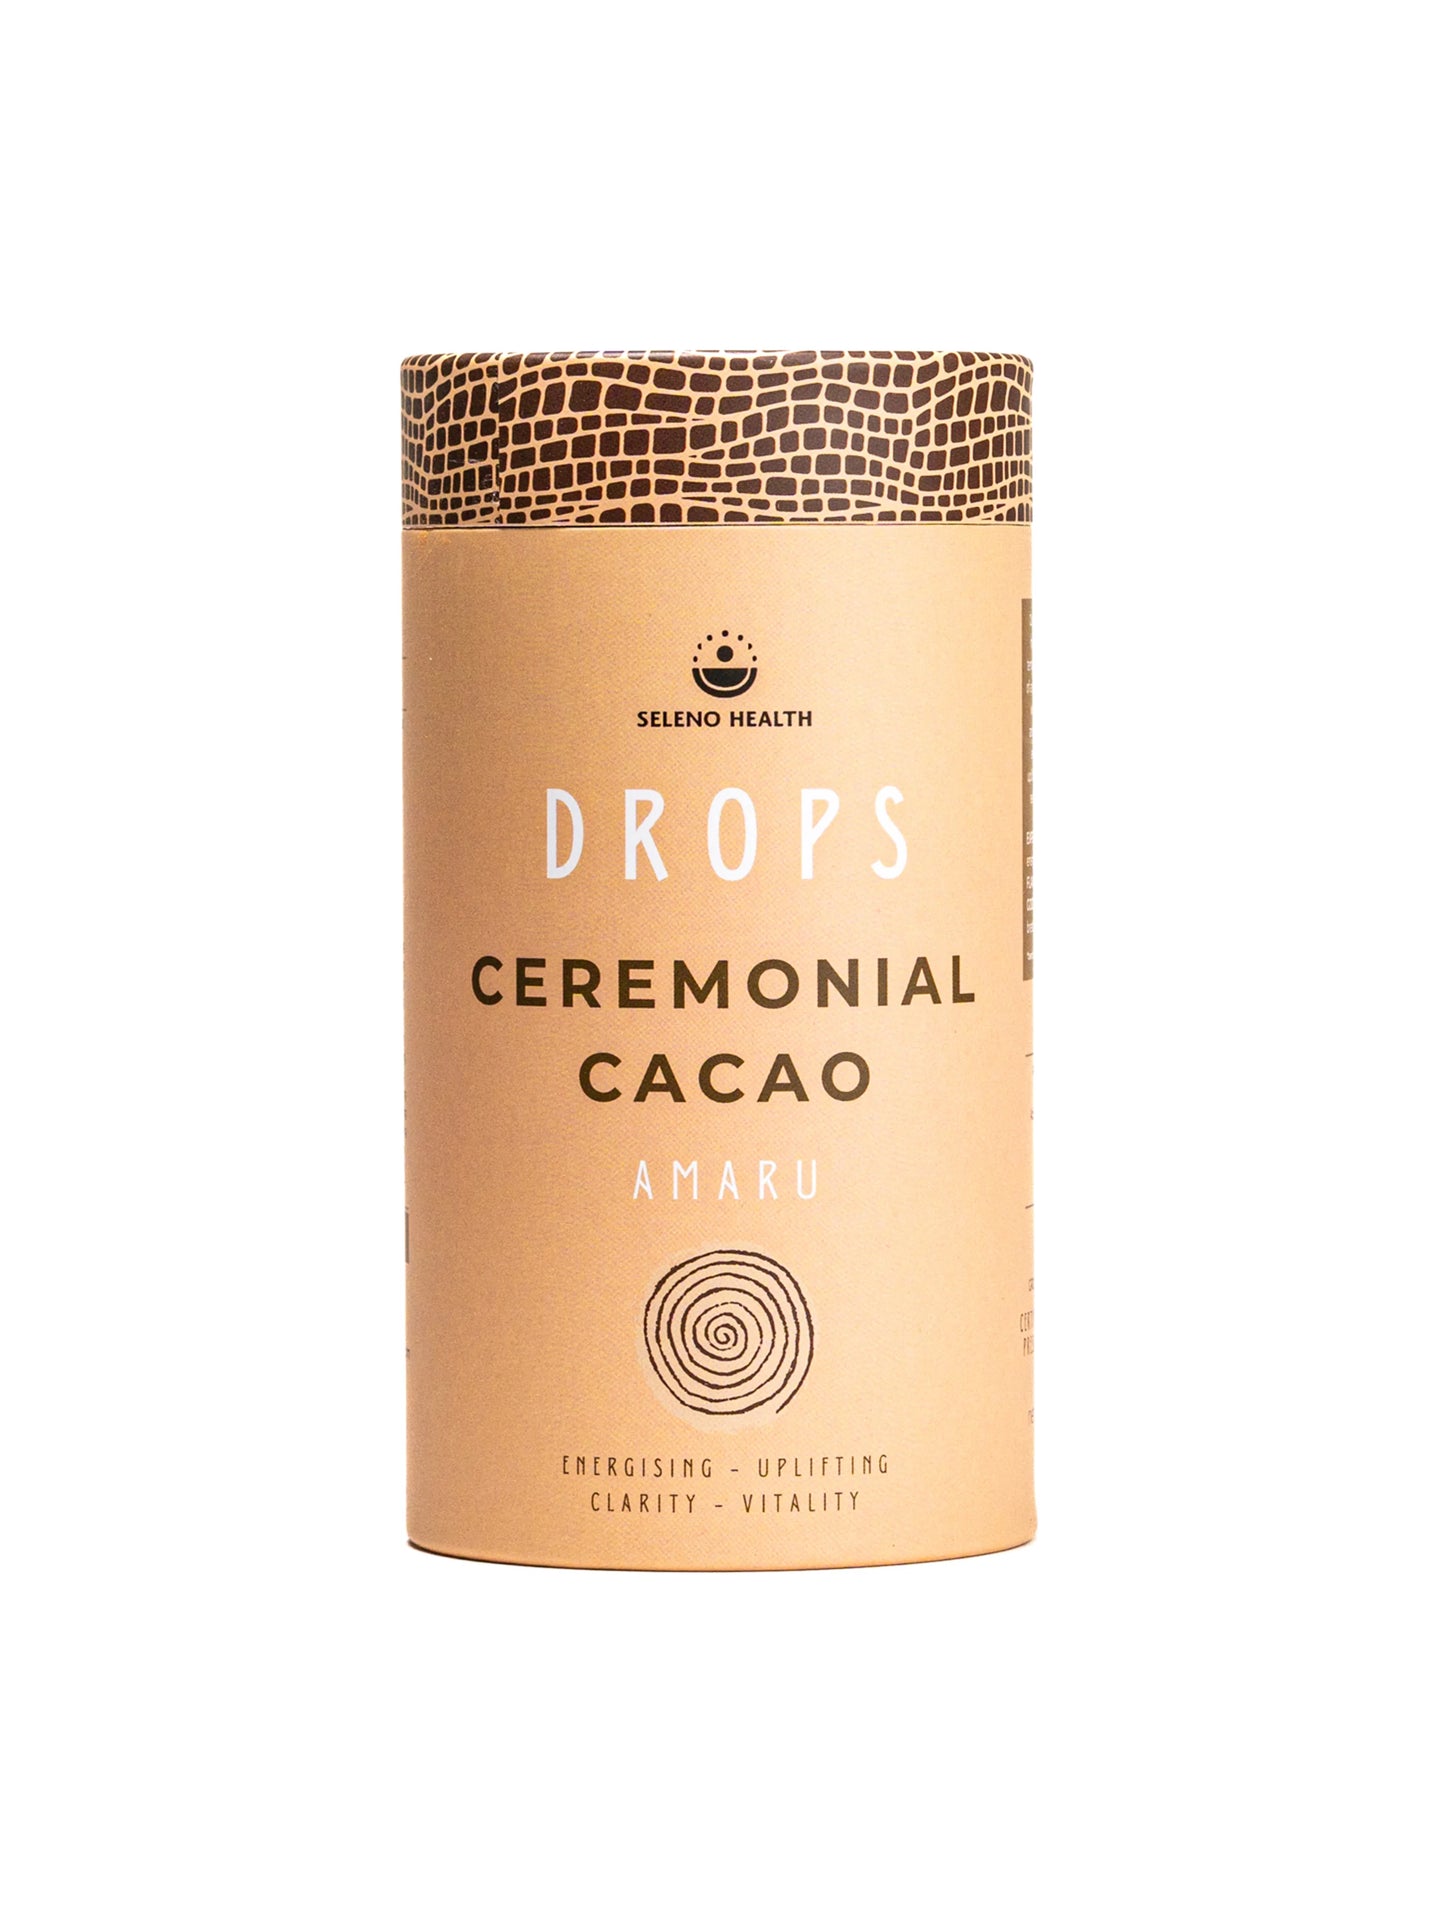 Seleno Ceremonial Cacao Drops 250g